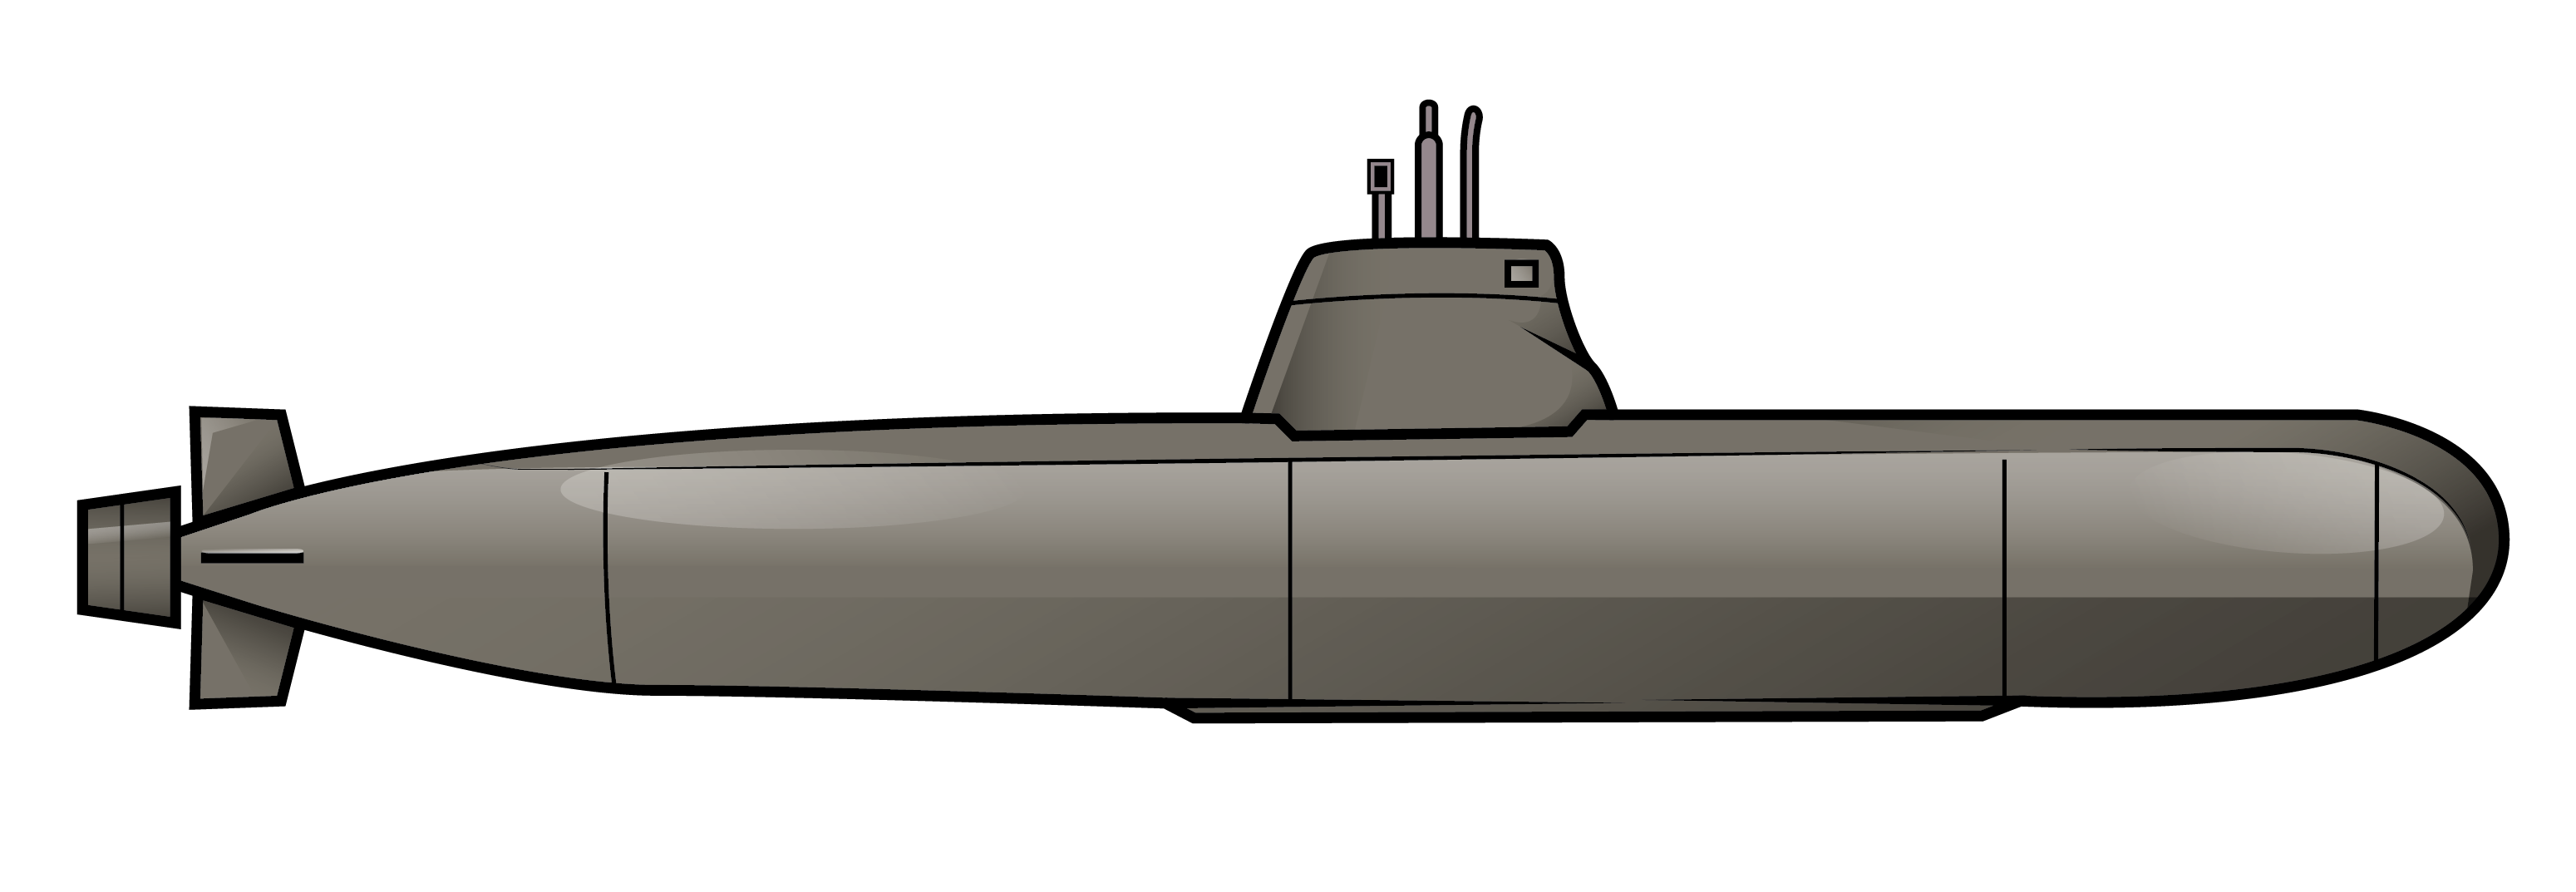 Free Military Submarine Clip 